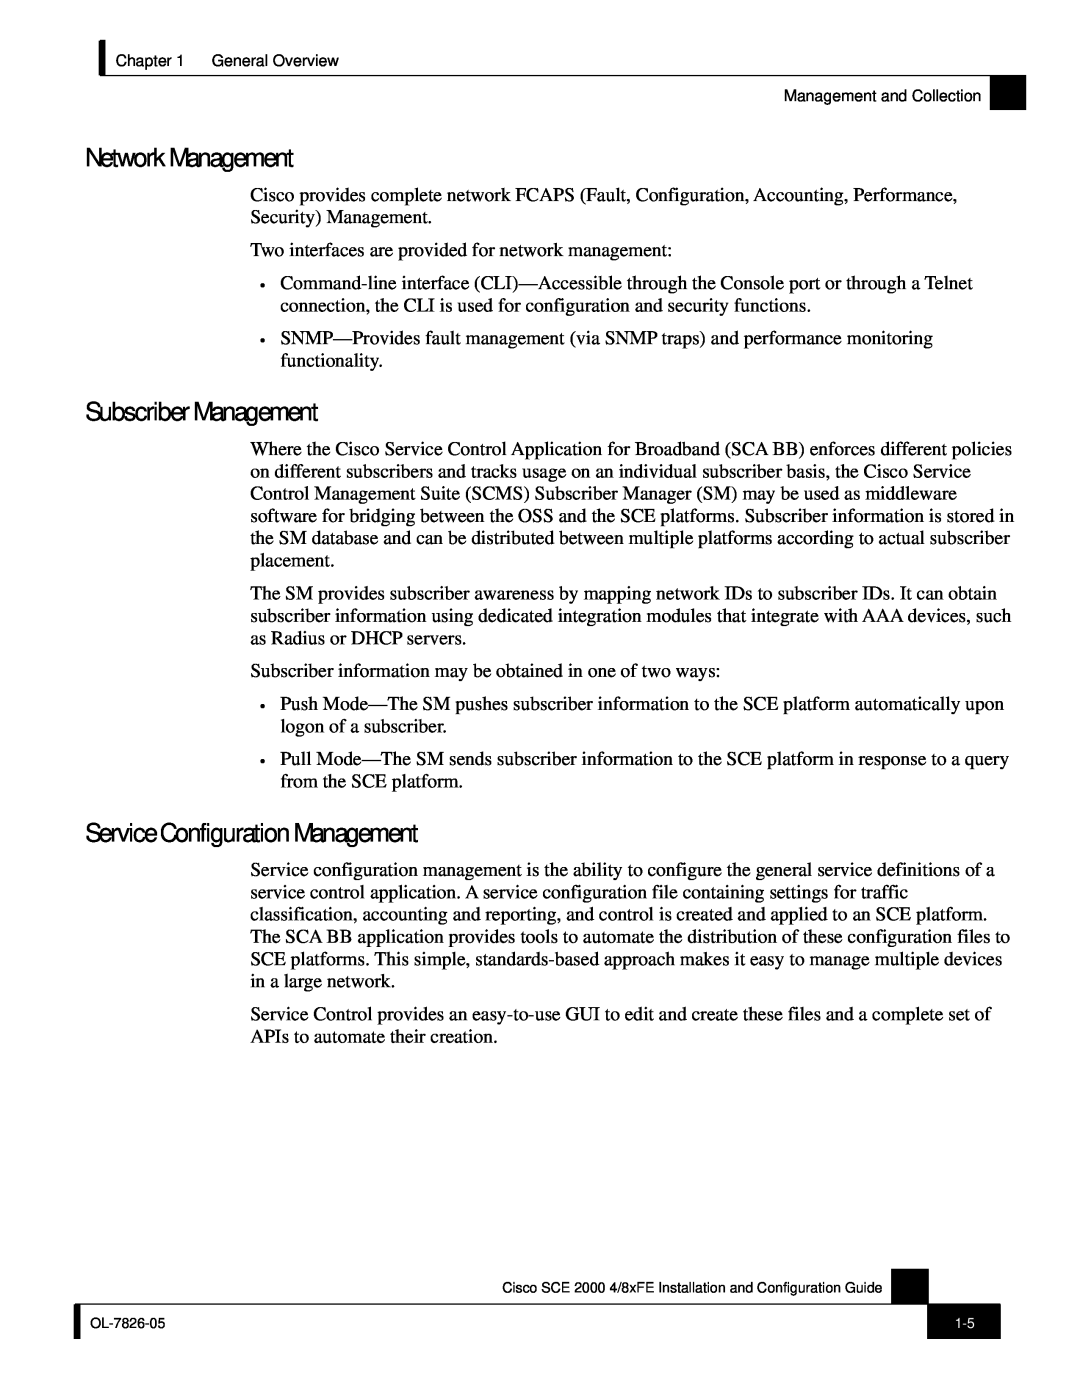 Cisco Systems SCE 2000 4/8xFE manual Network Management, Subscriber Management, Service Configuration Management 